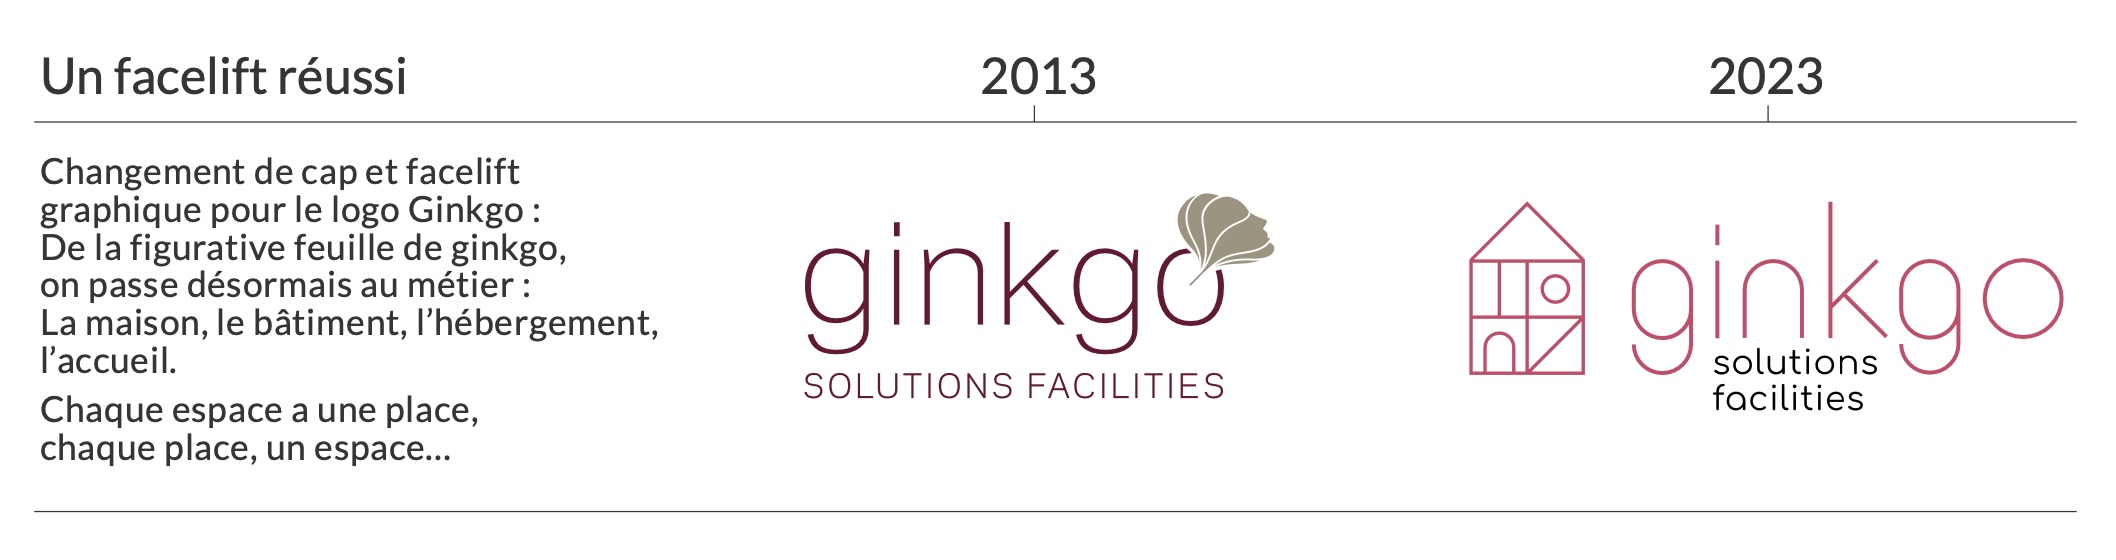 Ginkgo Solutions Logo Facelift